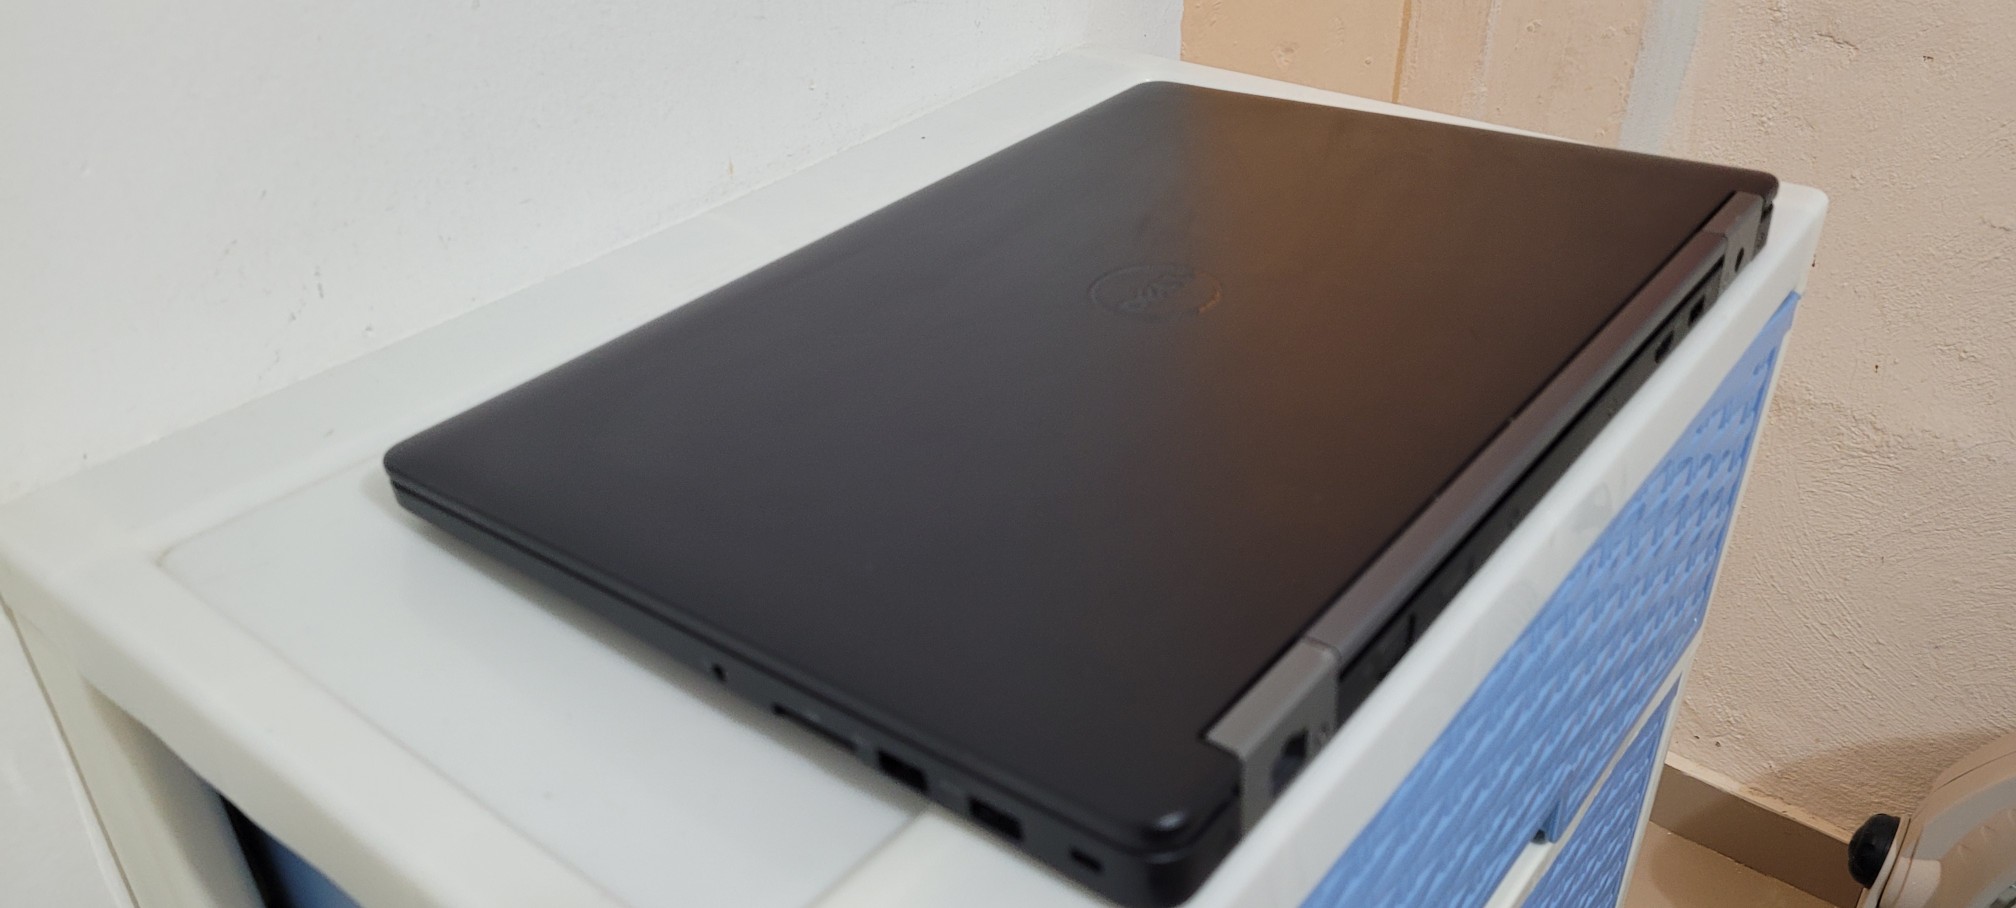 computadoras y laptops - Dell 5370 17 Pulg Core i7 6ta Gen Ram 8gb ddr4 Disco 256gb Solido bluetoth 2